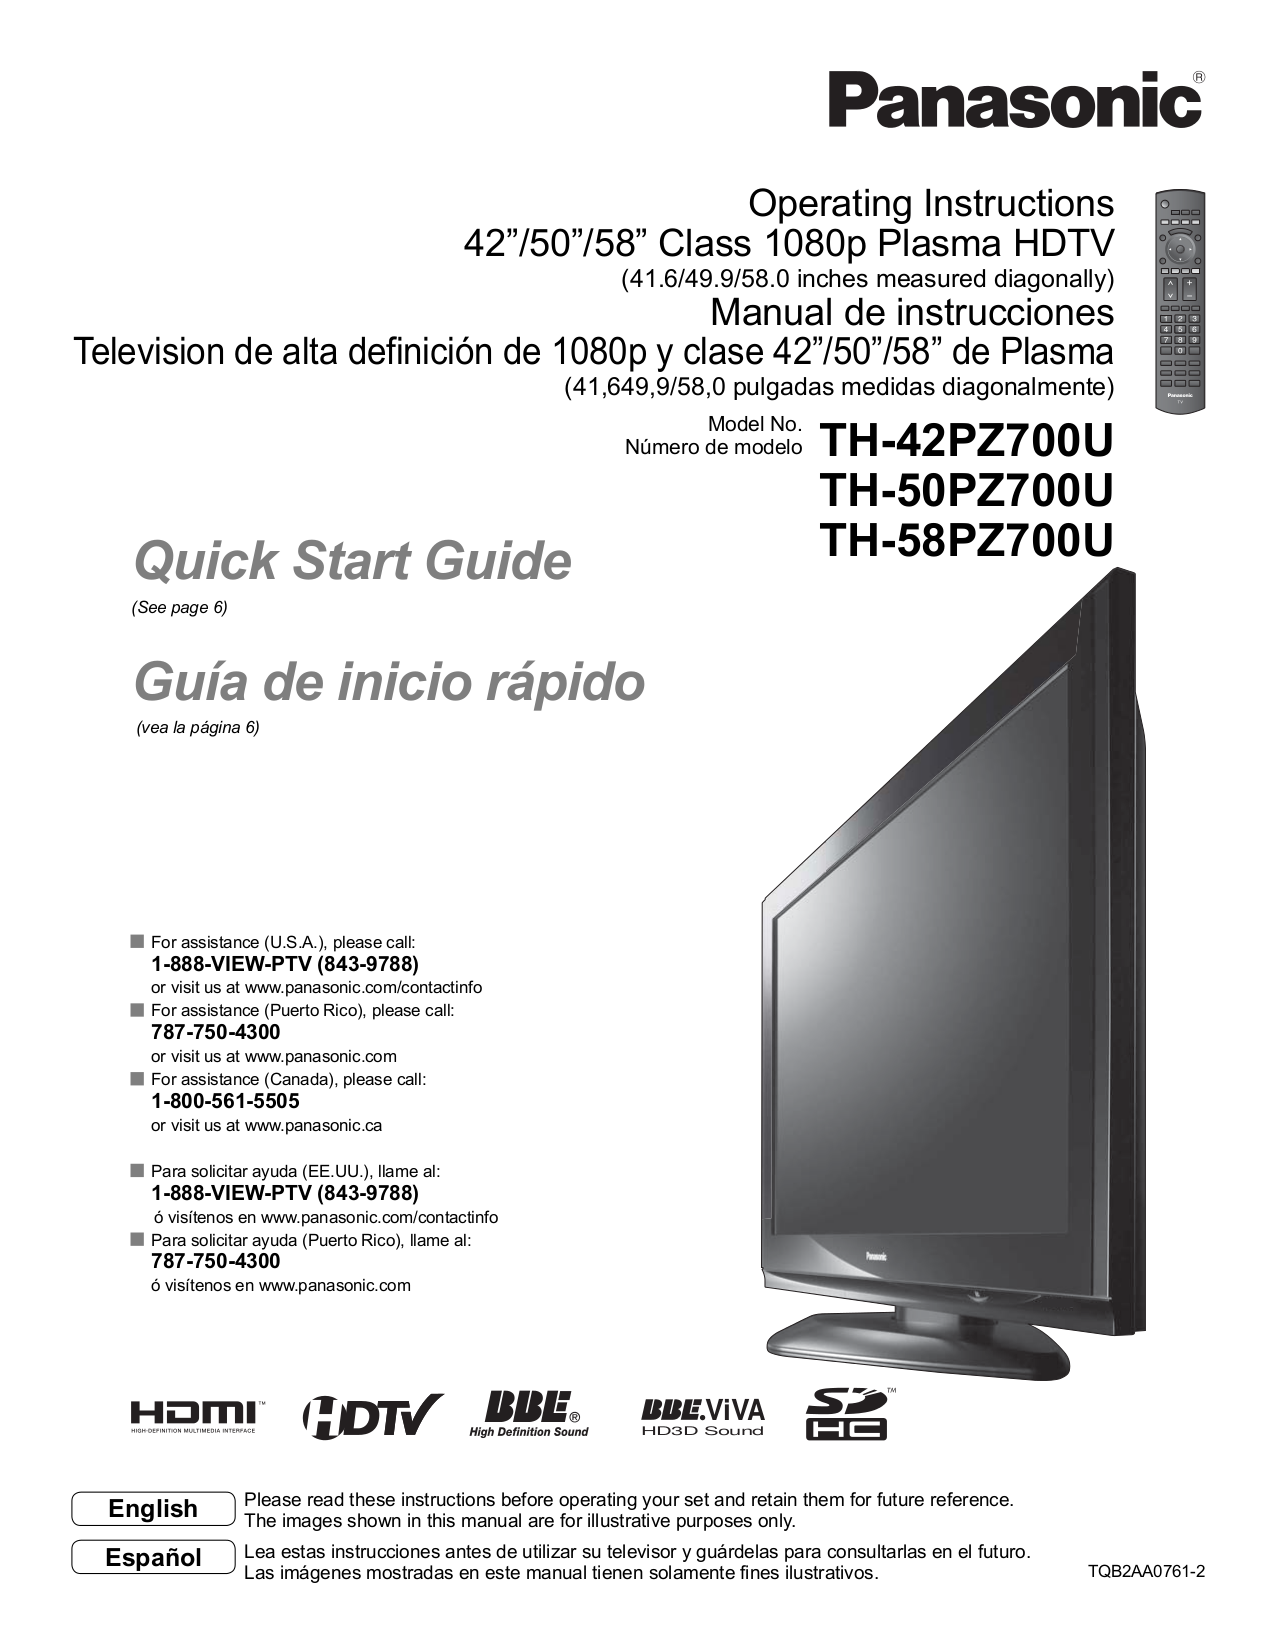 Download free pdf for Panasonic Viera TH-50PZ700 TV manual